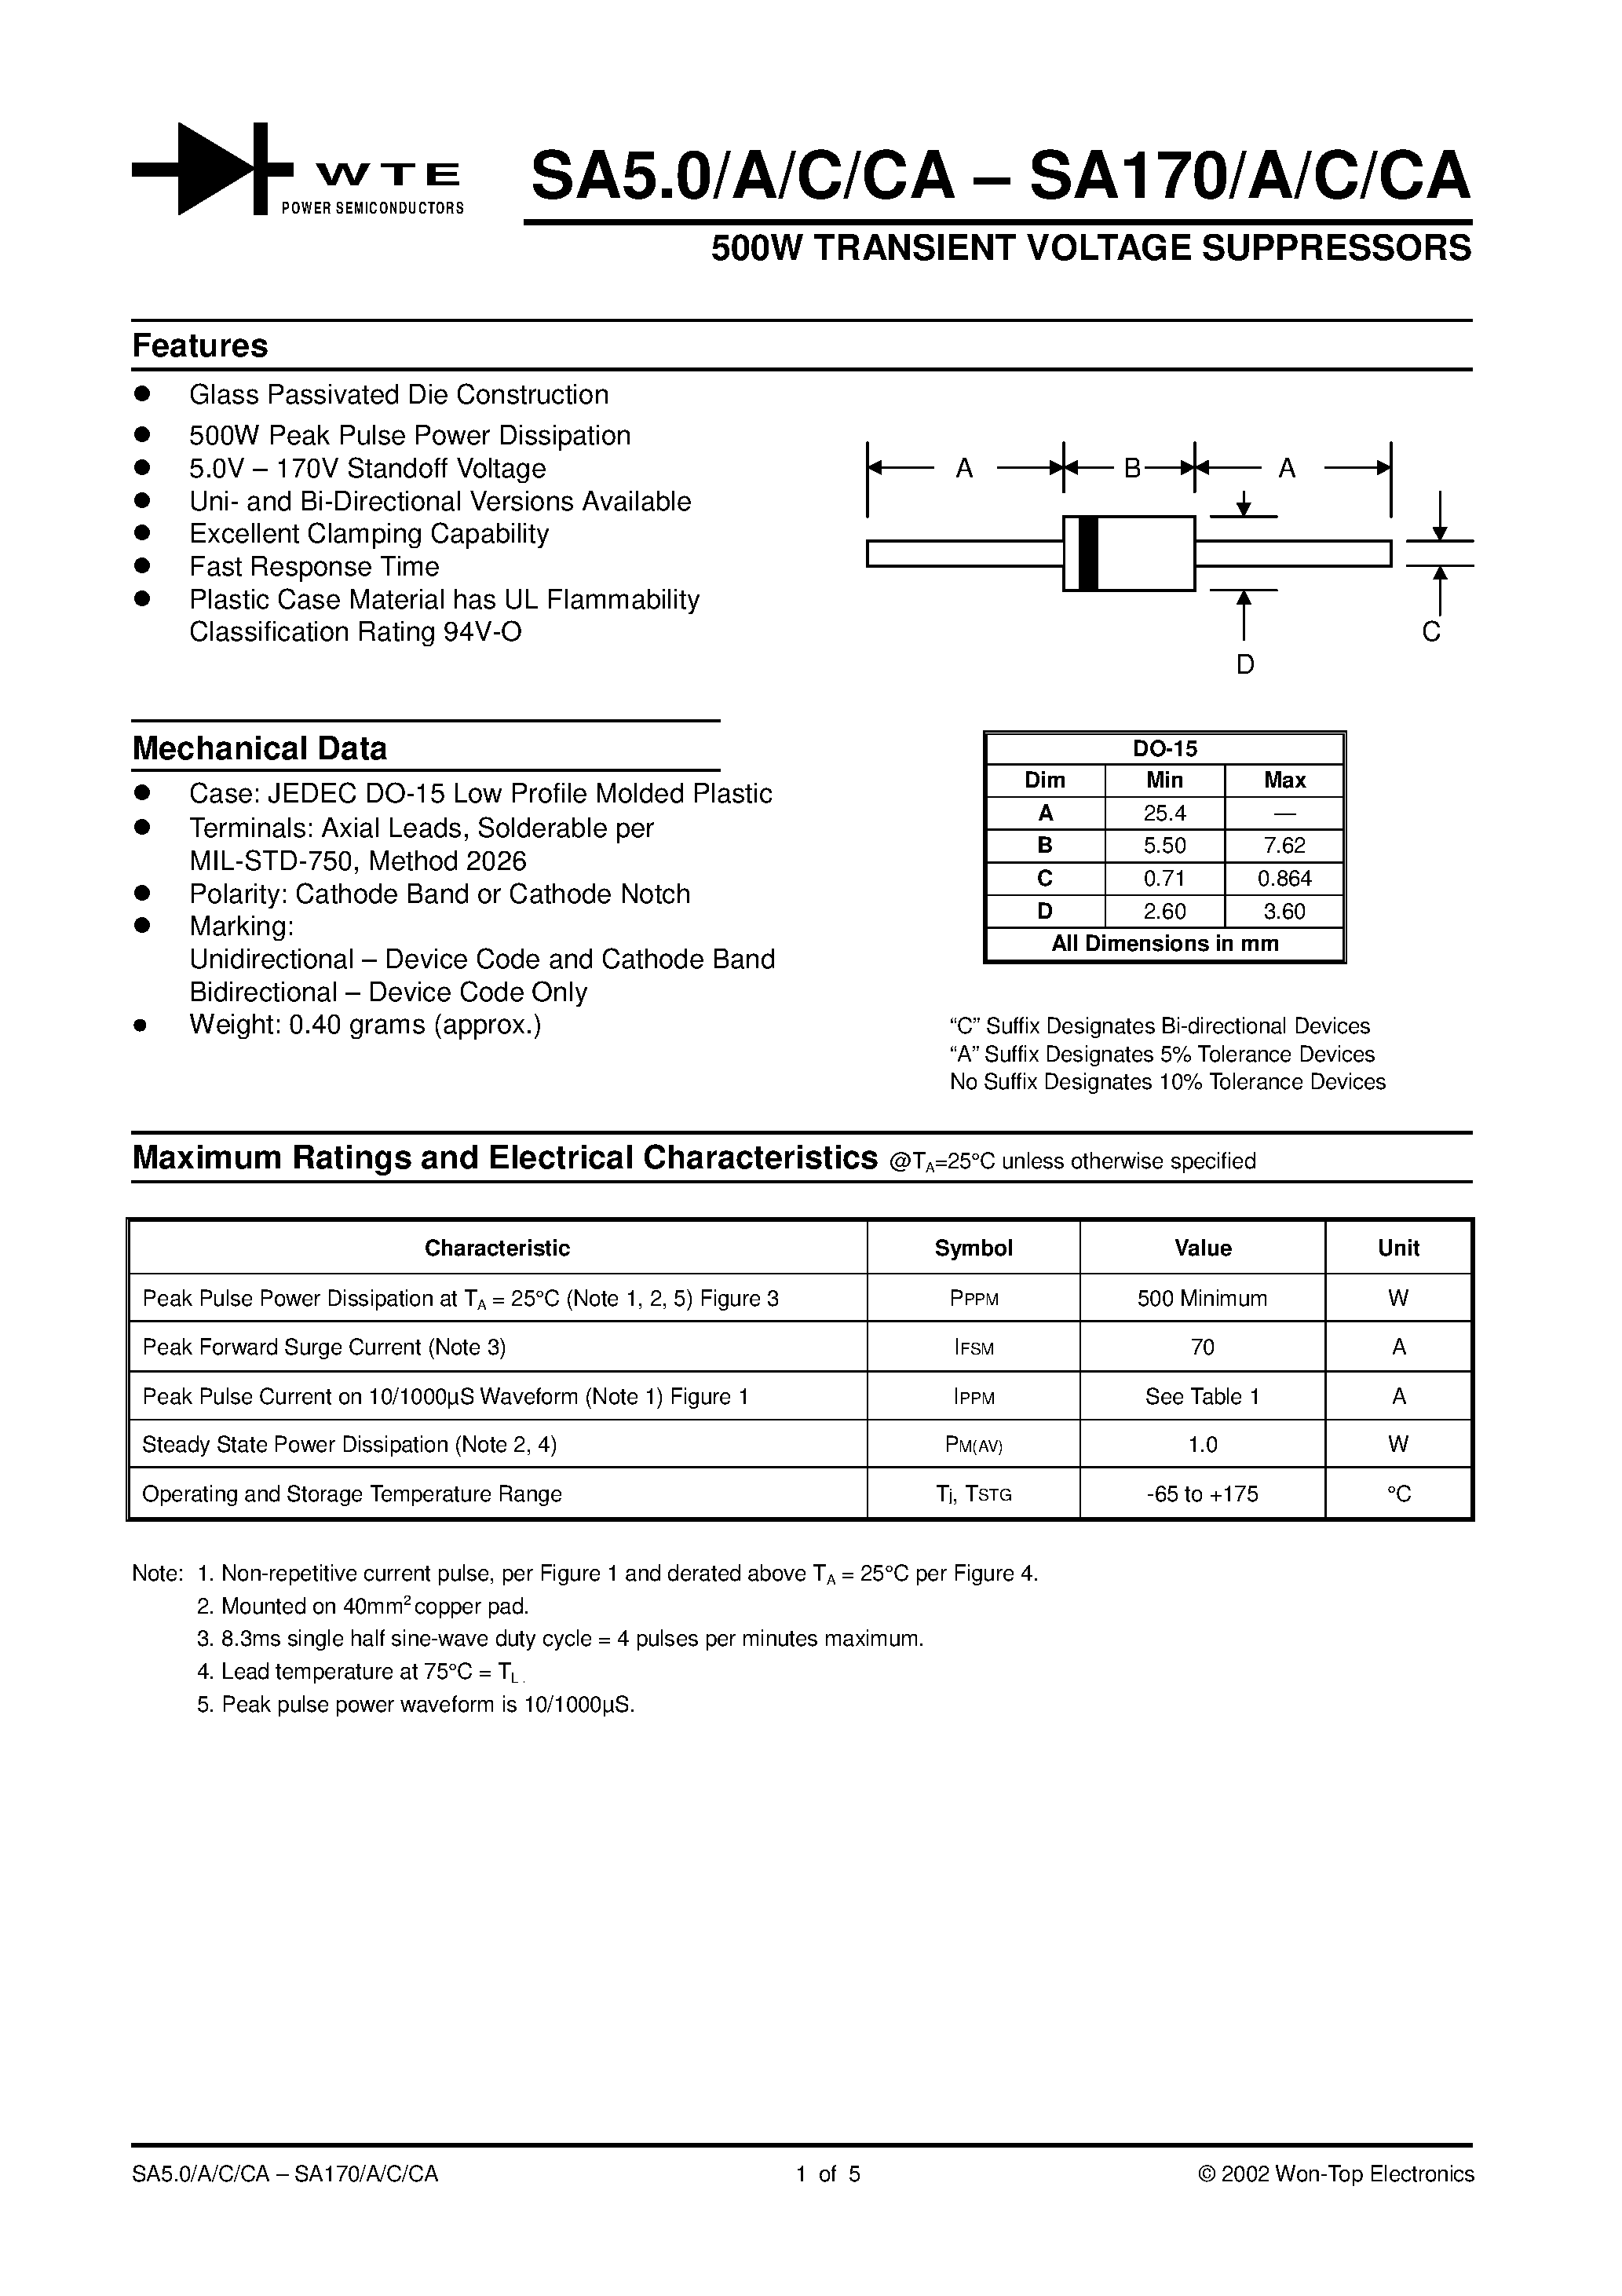 Datasheet SA28C - 500W TRANSIENT VOLTAGE SUPPRESSORS page 1